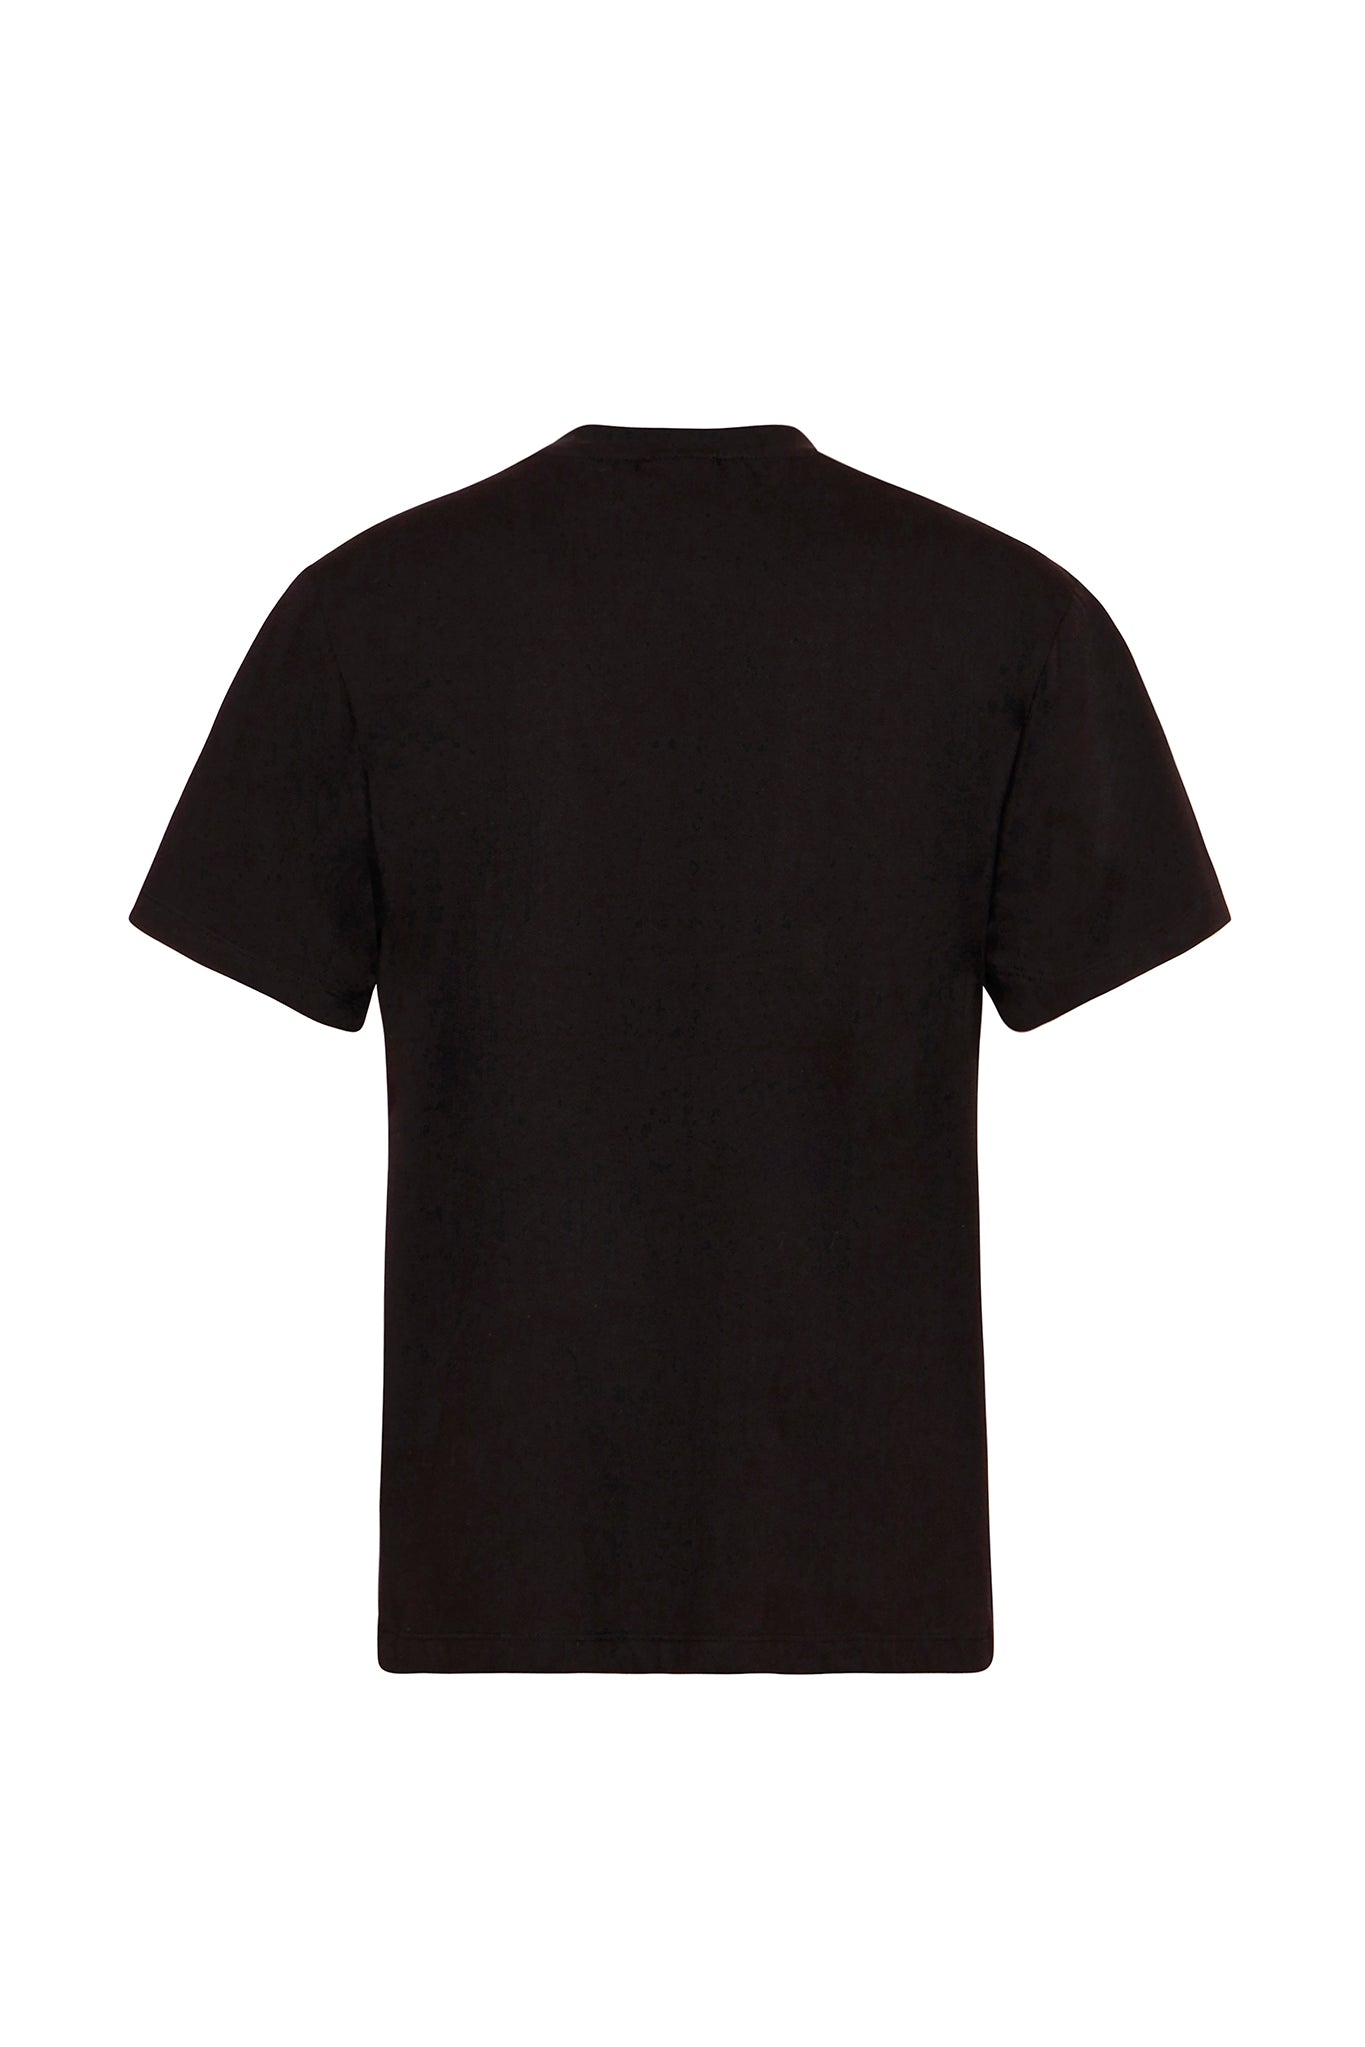 T-Shirt unisex con stampa / Nero - Ideal Moda